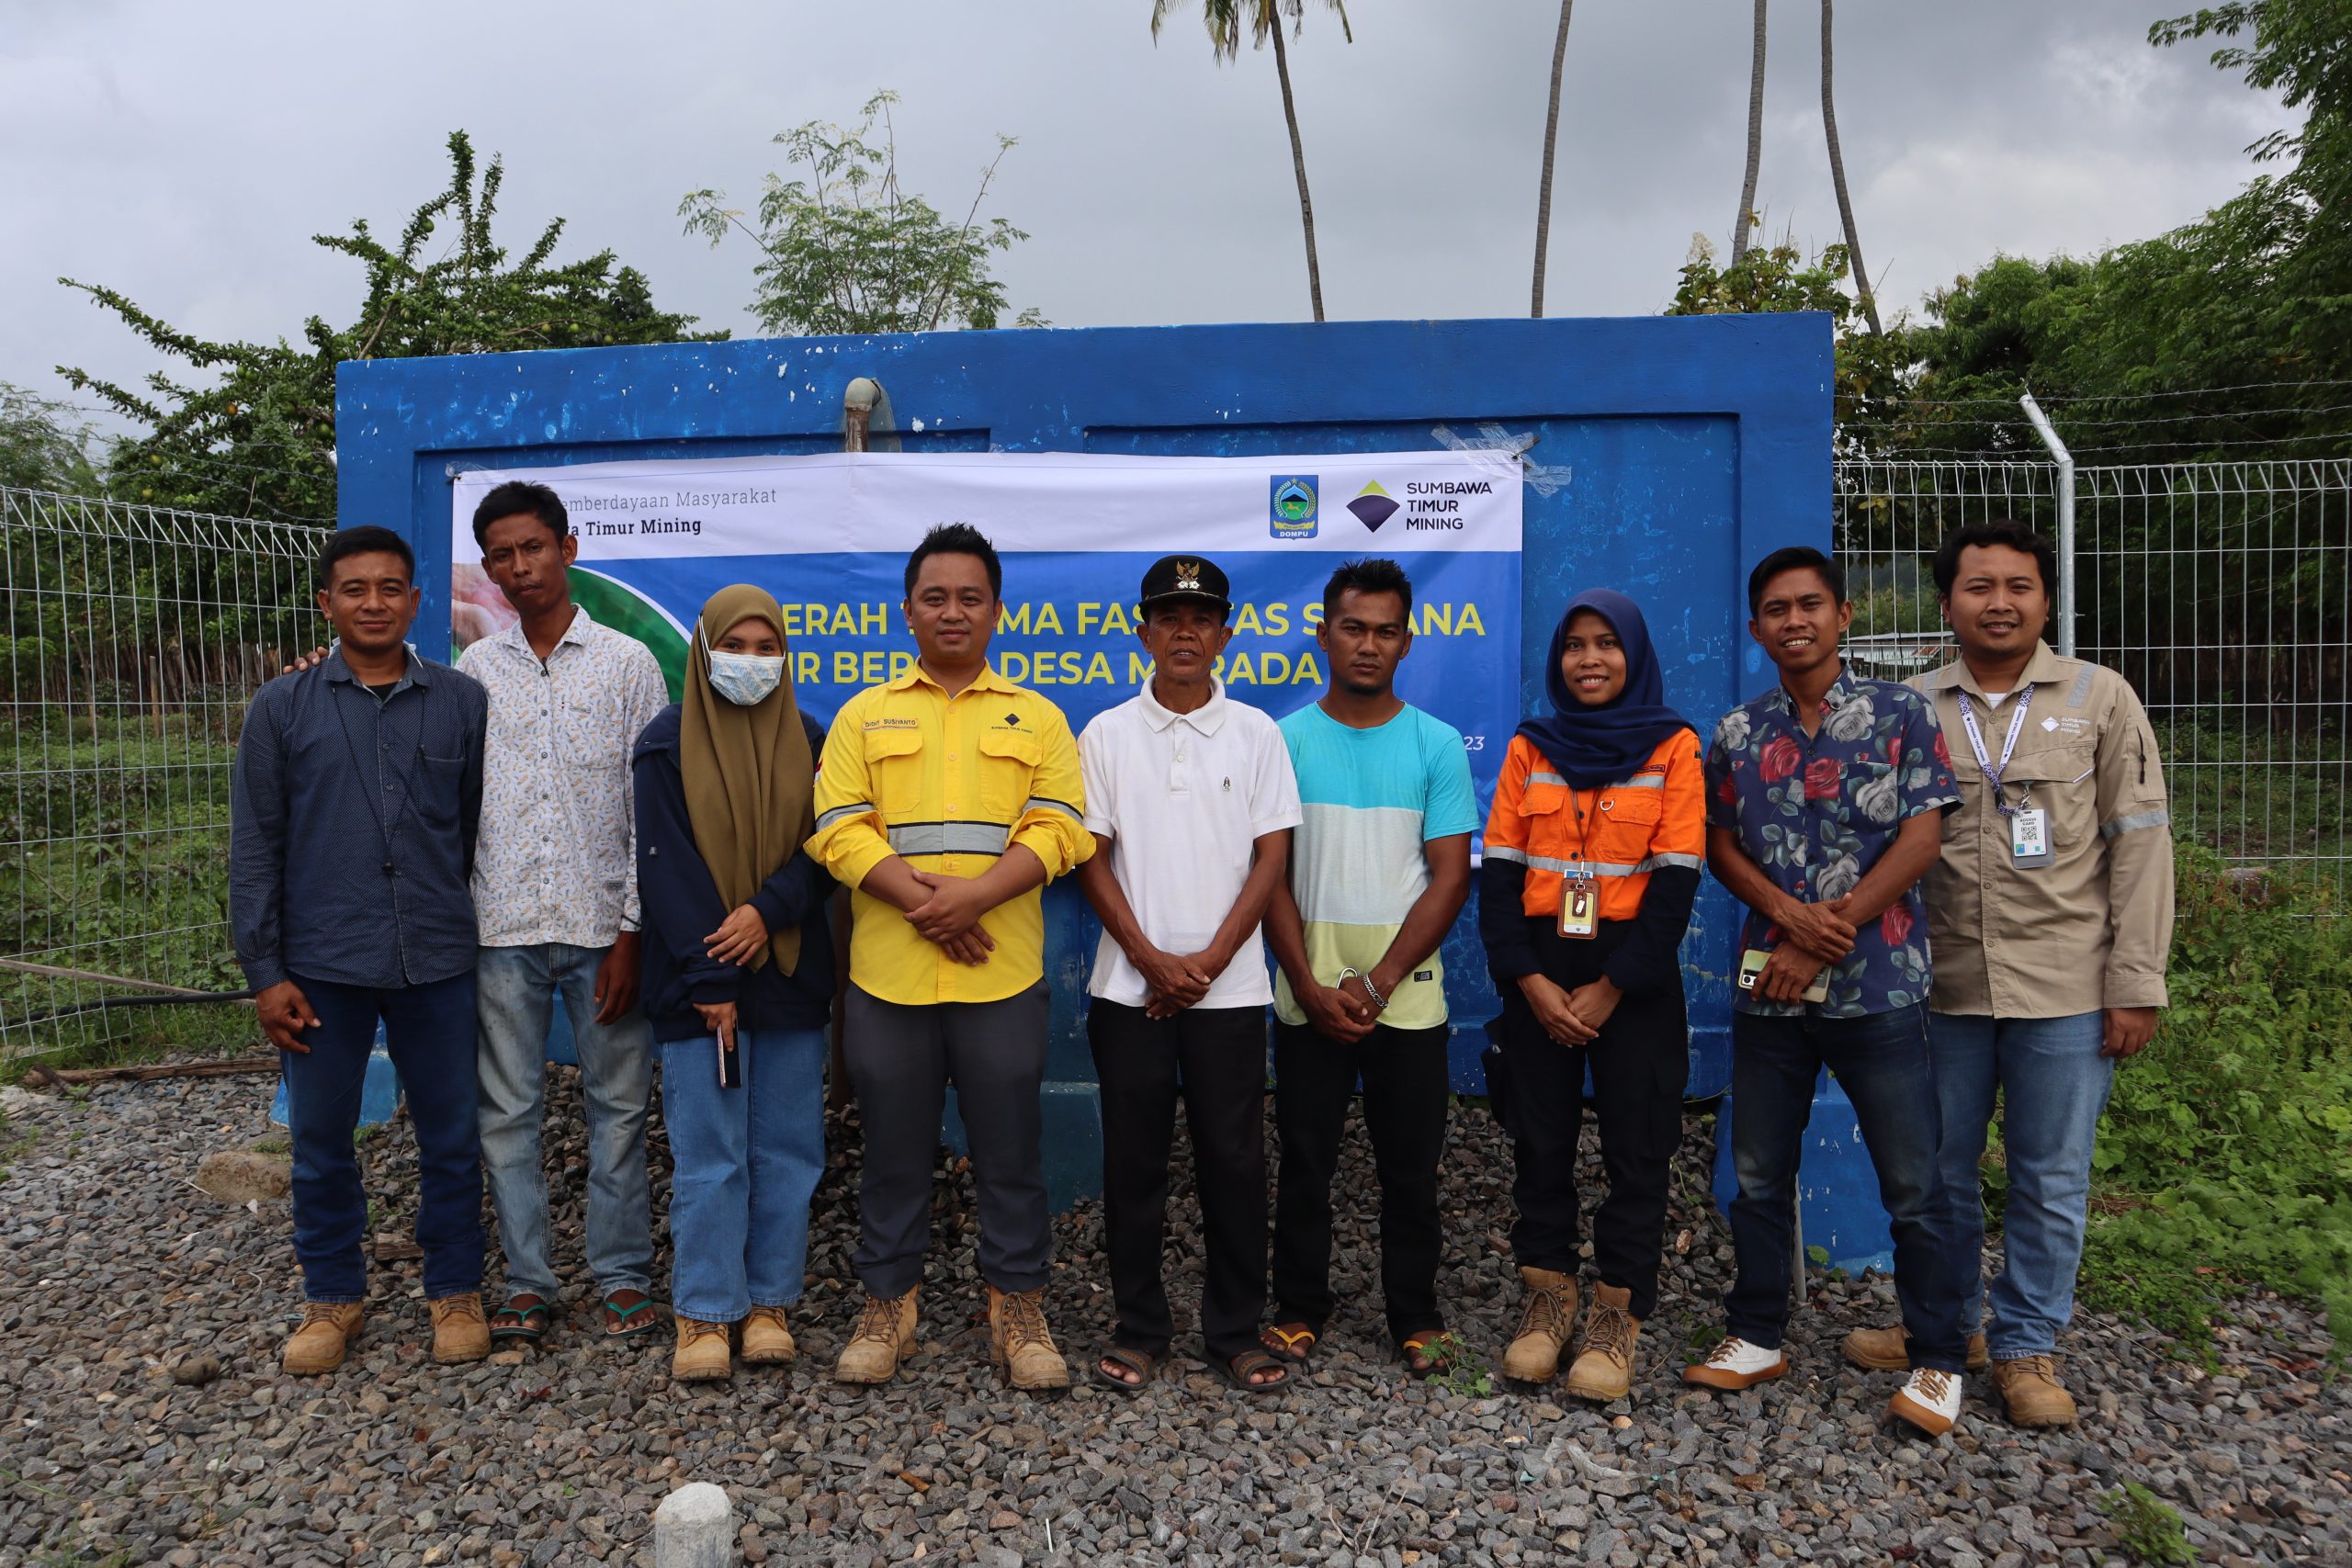 PT Sumbawa Timur Mining Provides Clean Water Facilities For Marada Village Residents